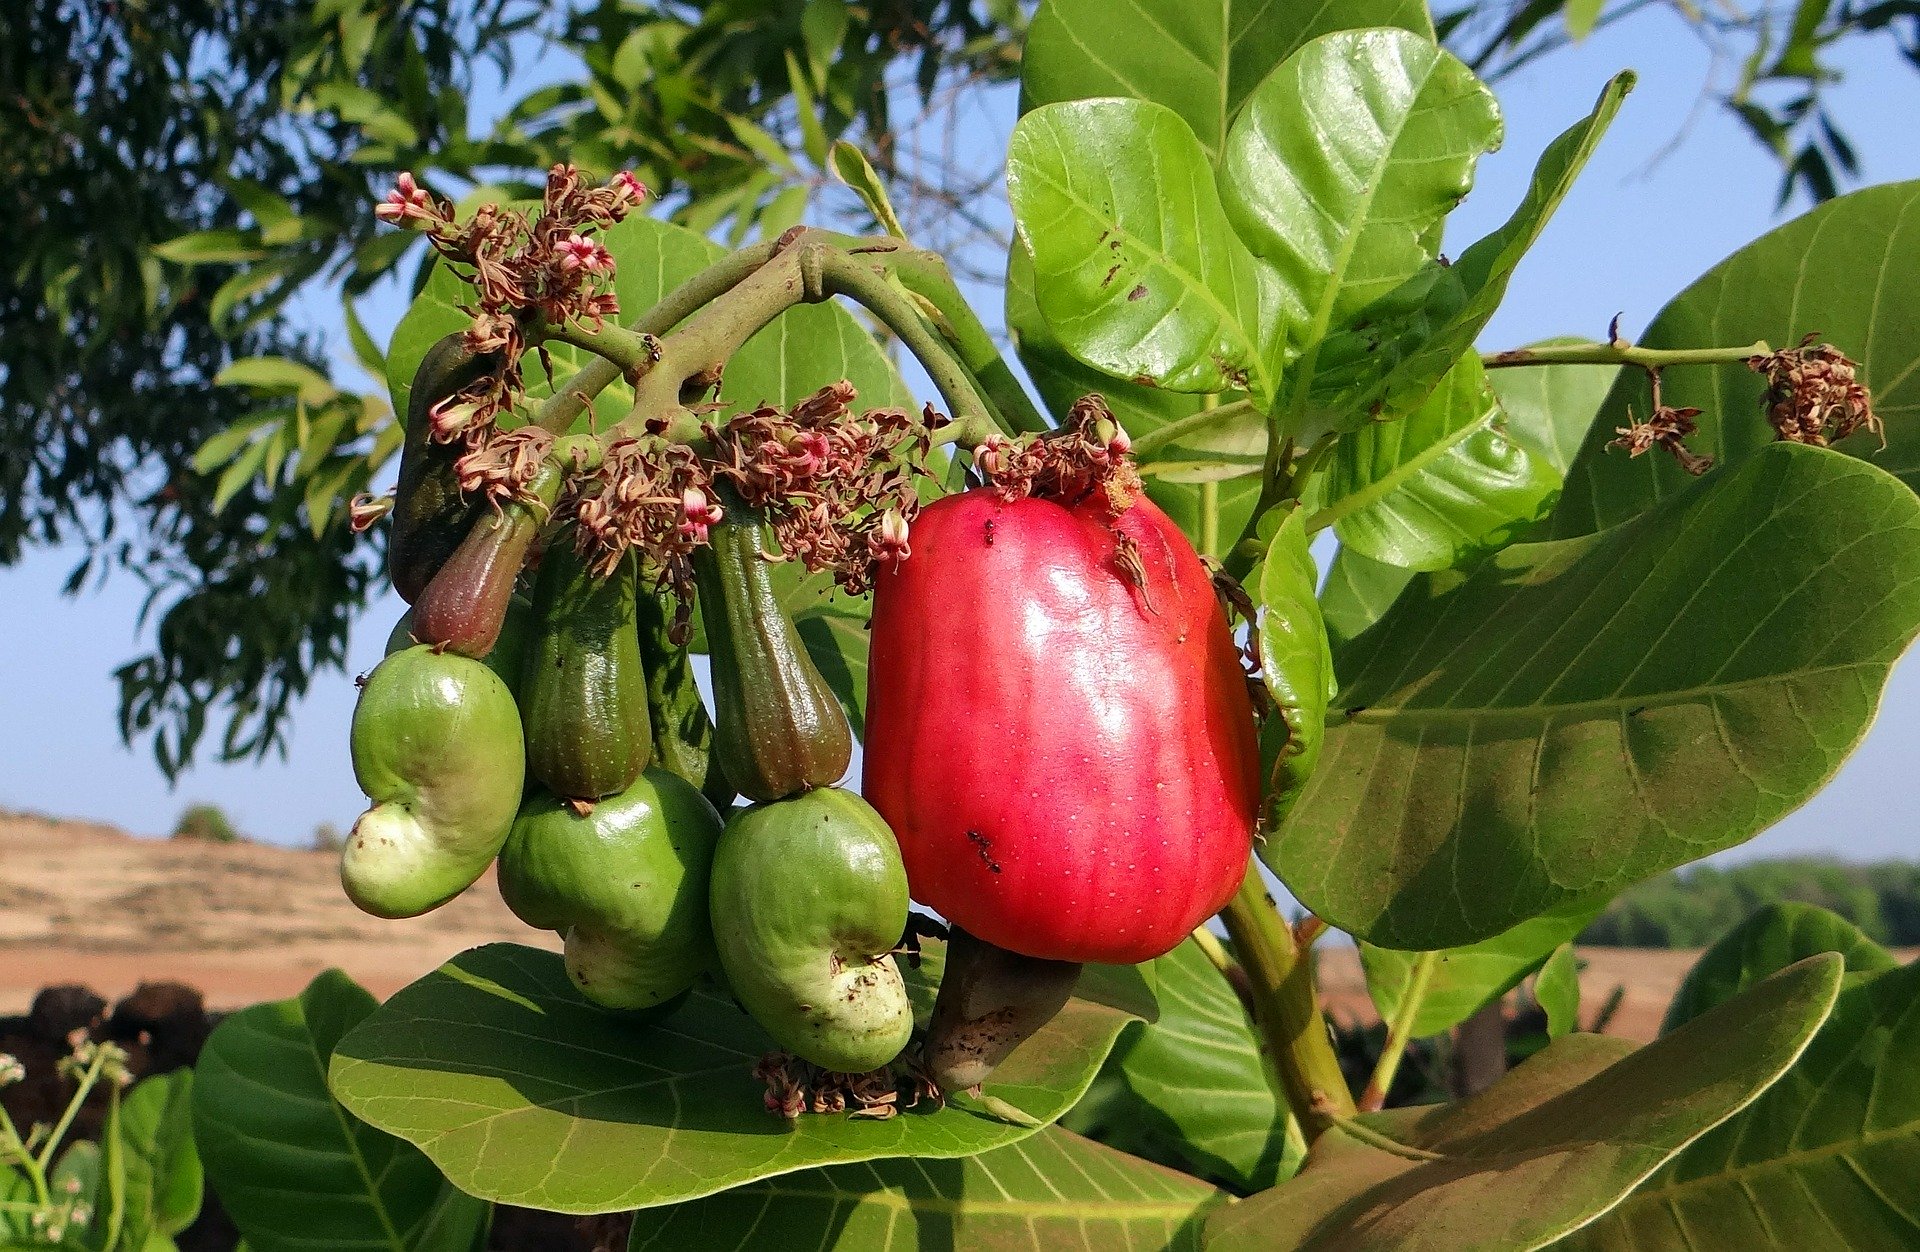 cashews grow on trees